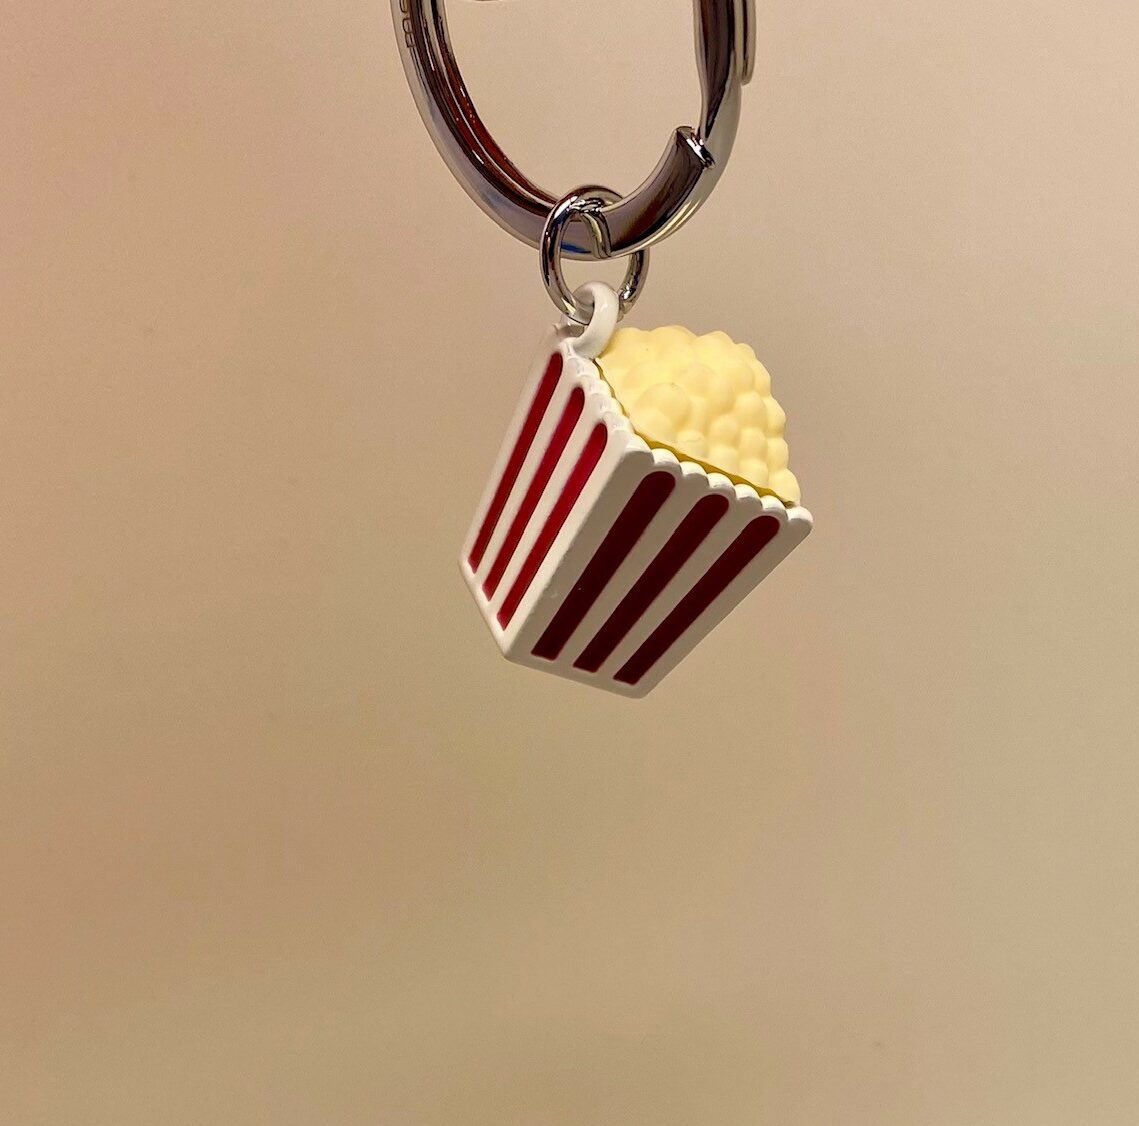 Nøglering - Popcorn i Bæger, pop corn, biffen, bio, biografen biograftur, billetter, klub, film, filmaften, symbolsk, gave, gavekort, gaveide, penge, sjov, lækker, kvalitet, biti, ribe, filmfestival,